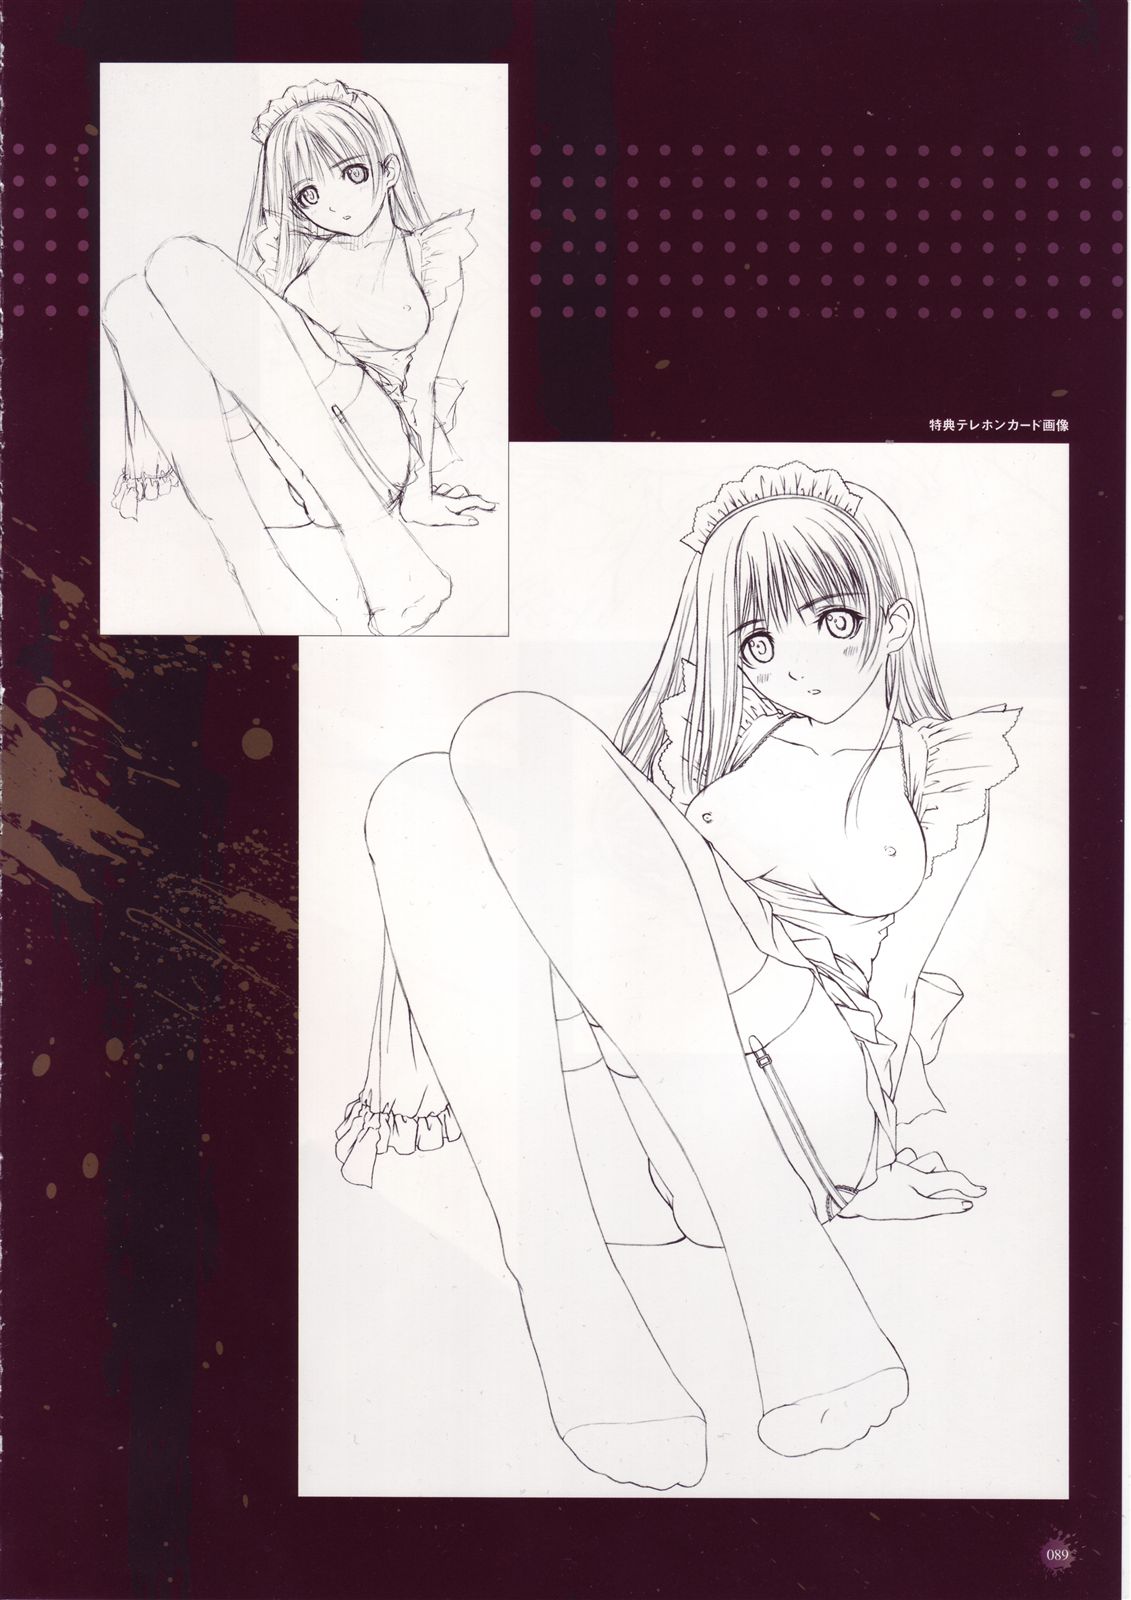 [T2 Art Works, Tony Taka] - Shiryusha Book (sora no iro mizu no iro, genmukan) 